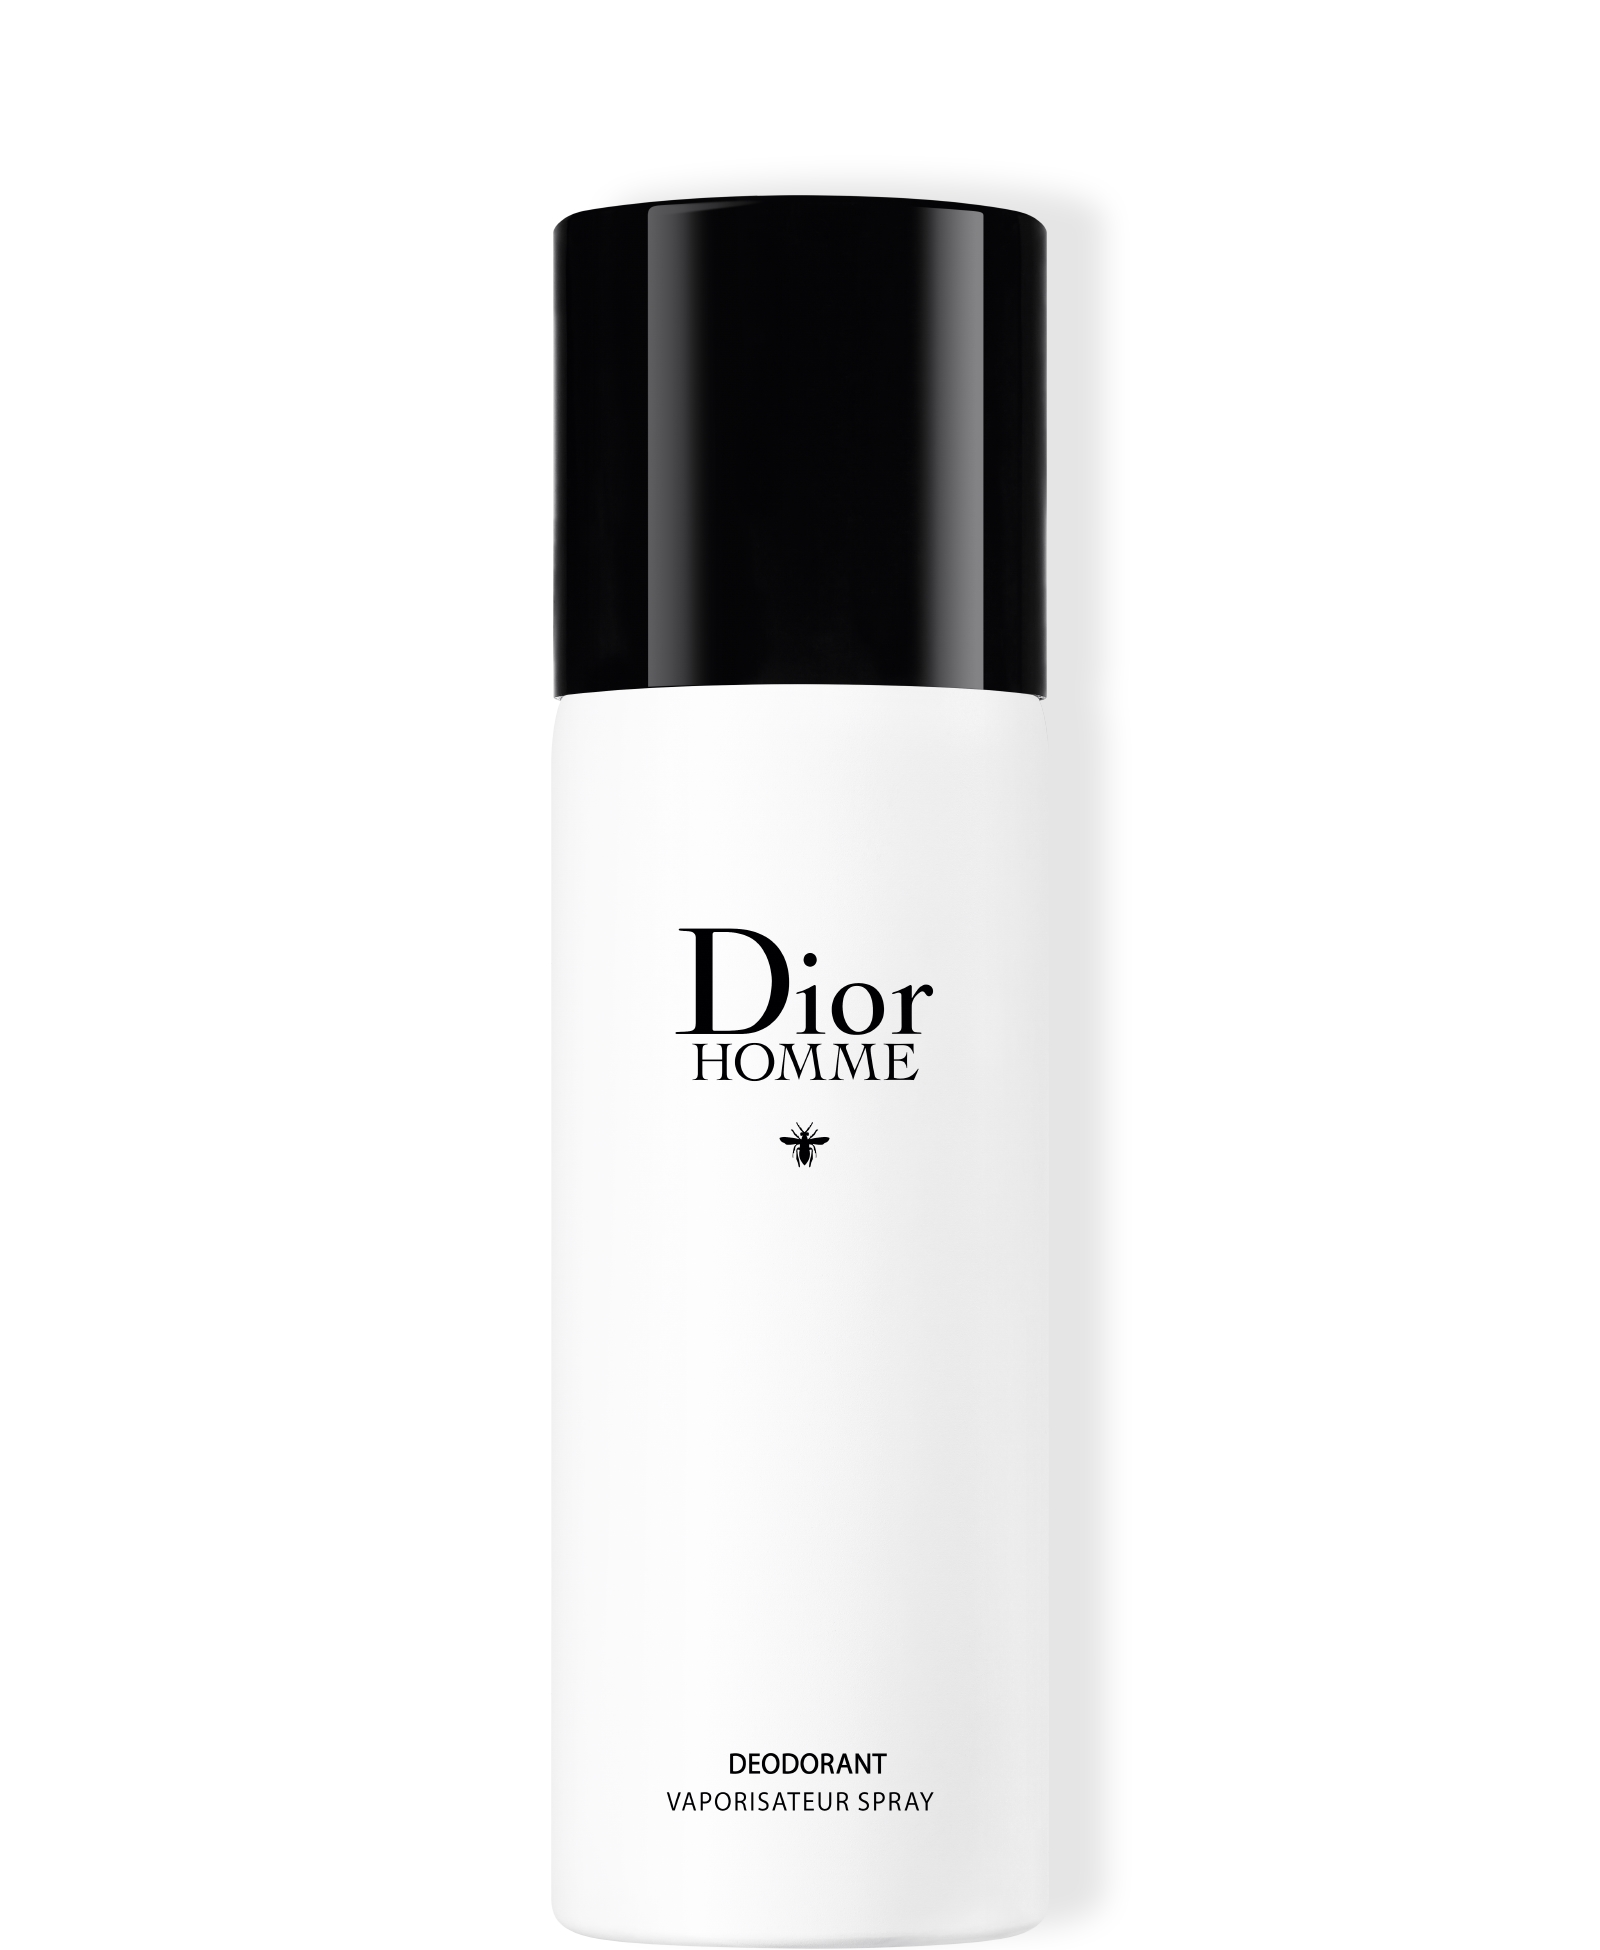  Dior Homme Spray deodorant, 150 ml